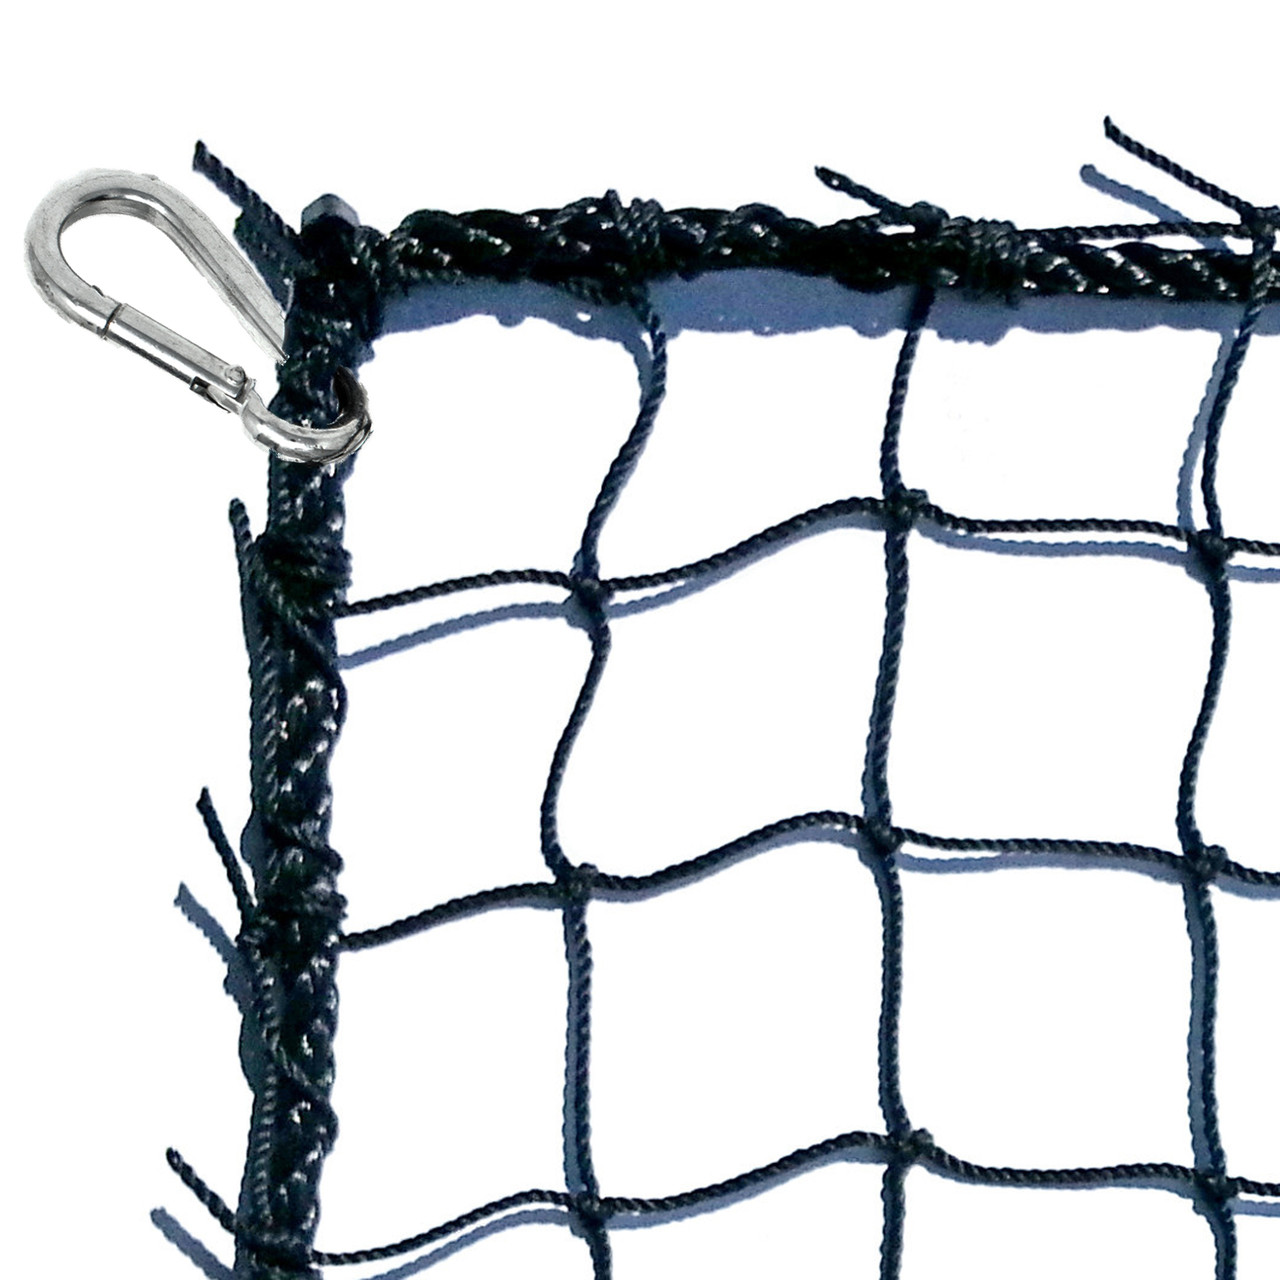 Goodwin Nets 6 Twisted Knotted Nylon 1 7//8 Baseball//Softball Backstop Net Barrier Netting #21 Black Square